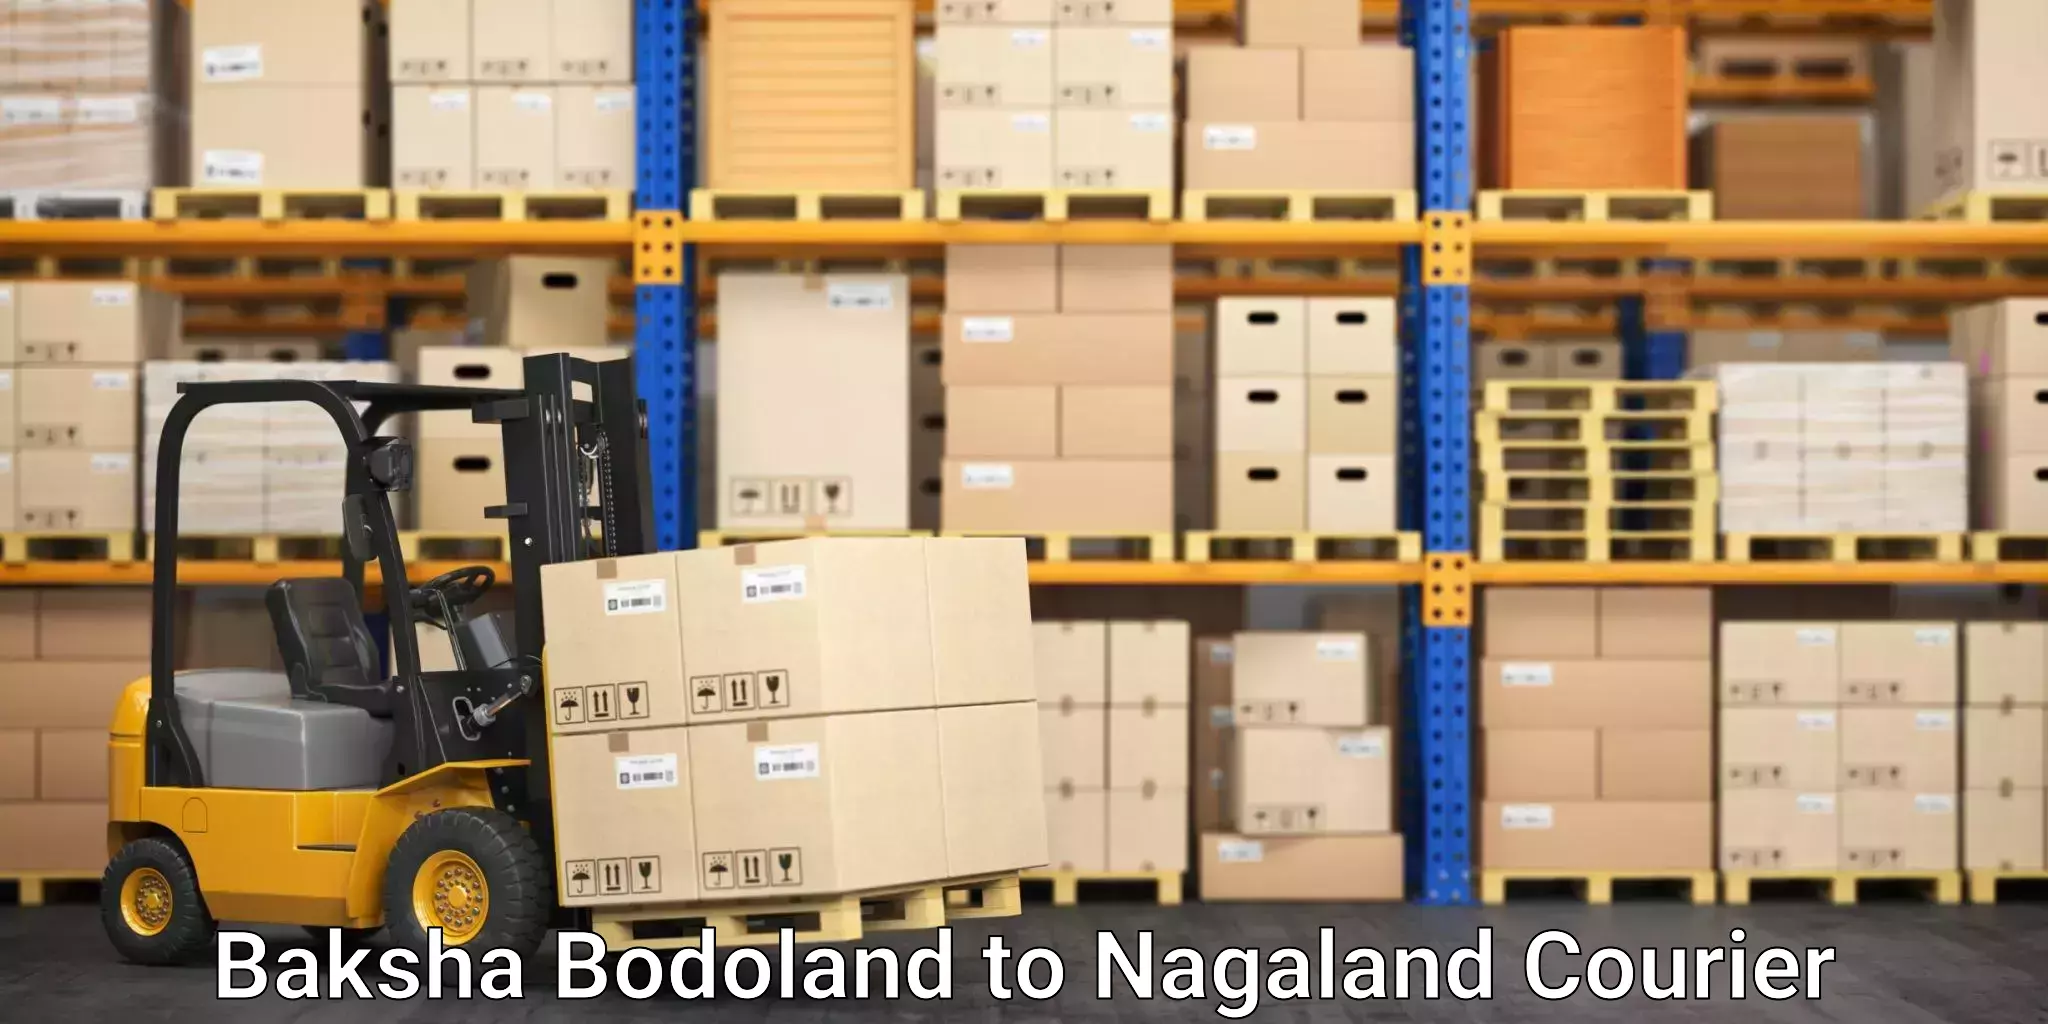 Efficient freight service Baksha Bodoland to Nagaland